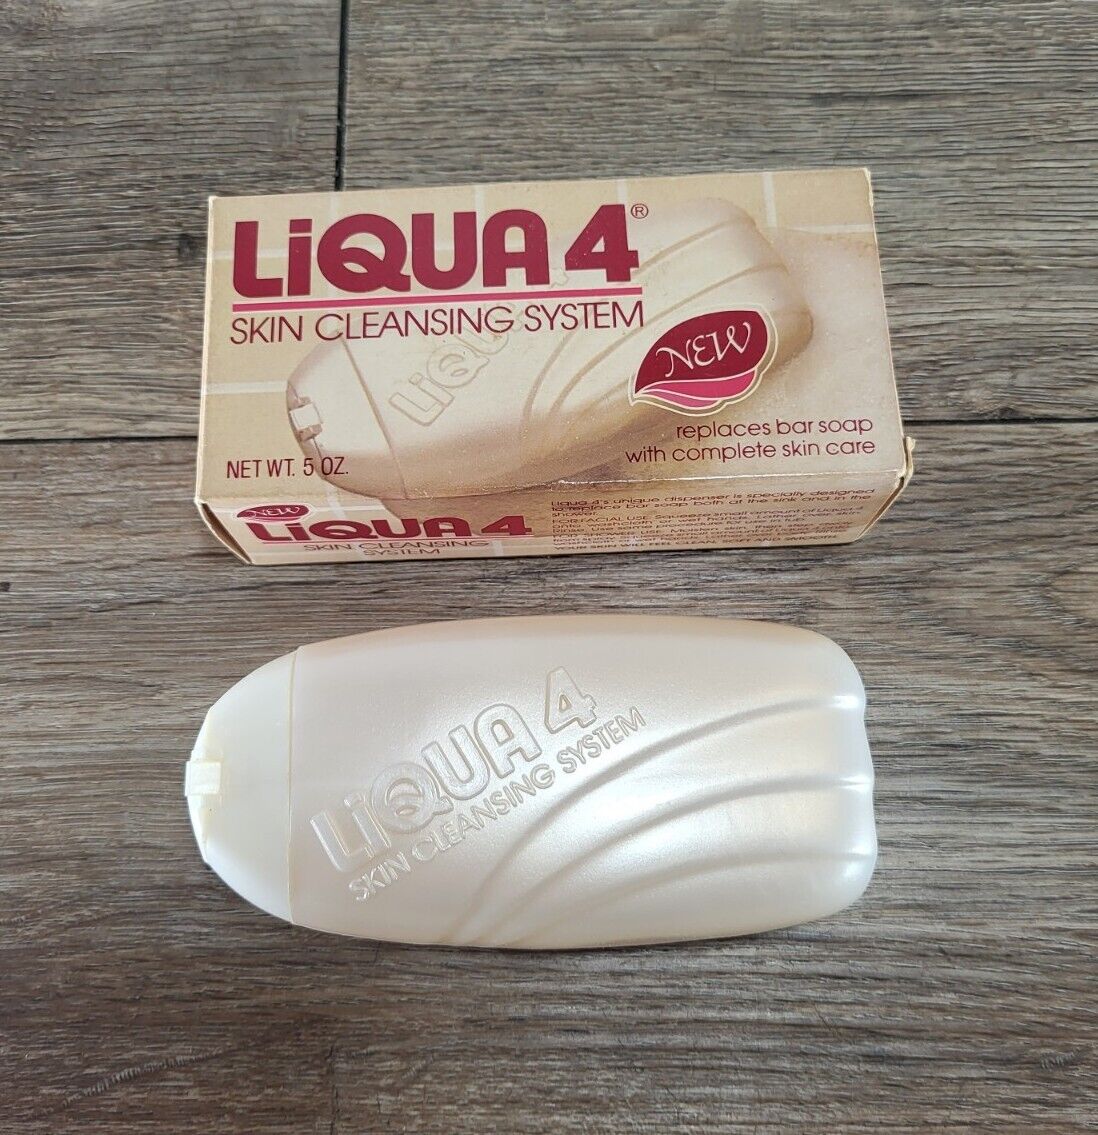 Vintage Liqua 4 Skin Cleansing System Replaces Bar Soap 5 Oz New NOS